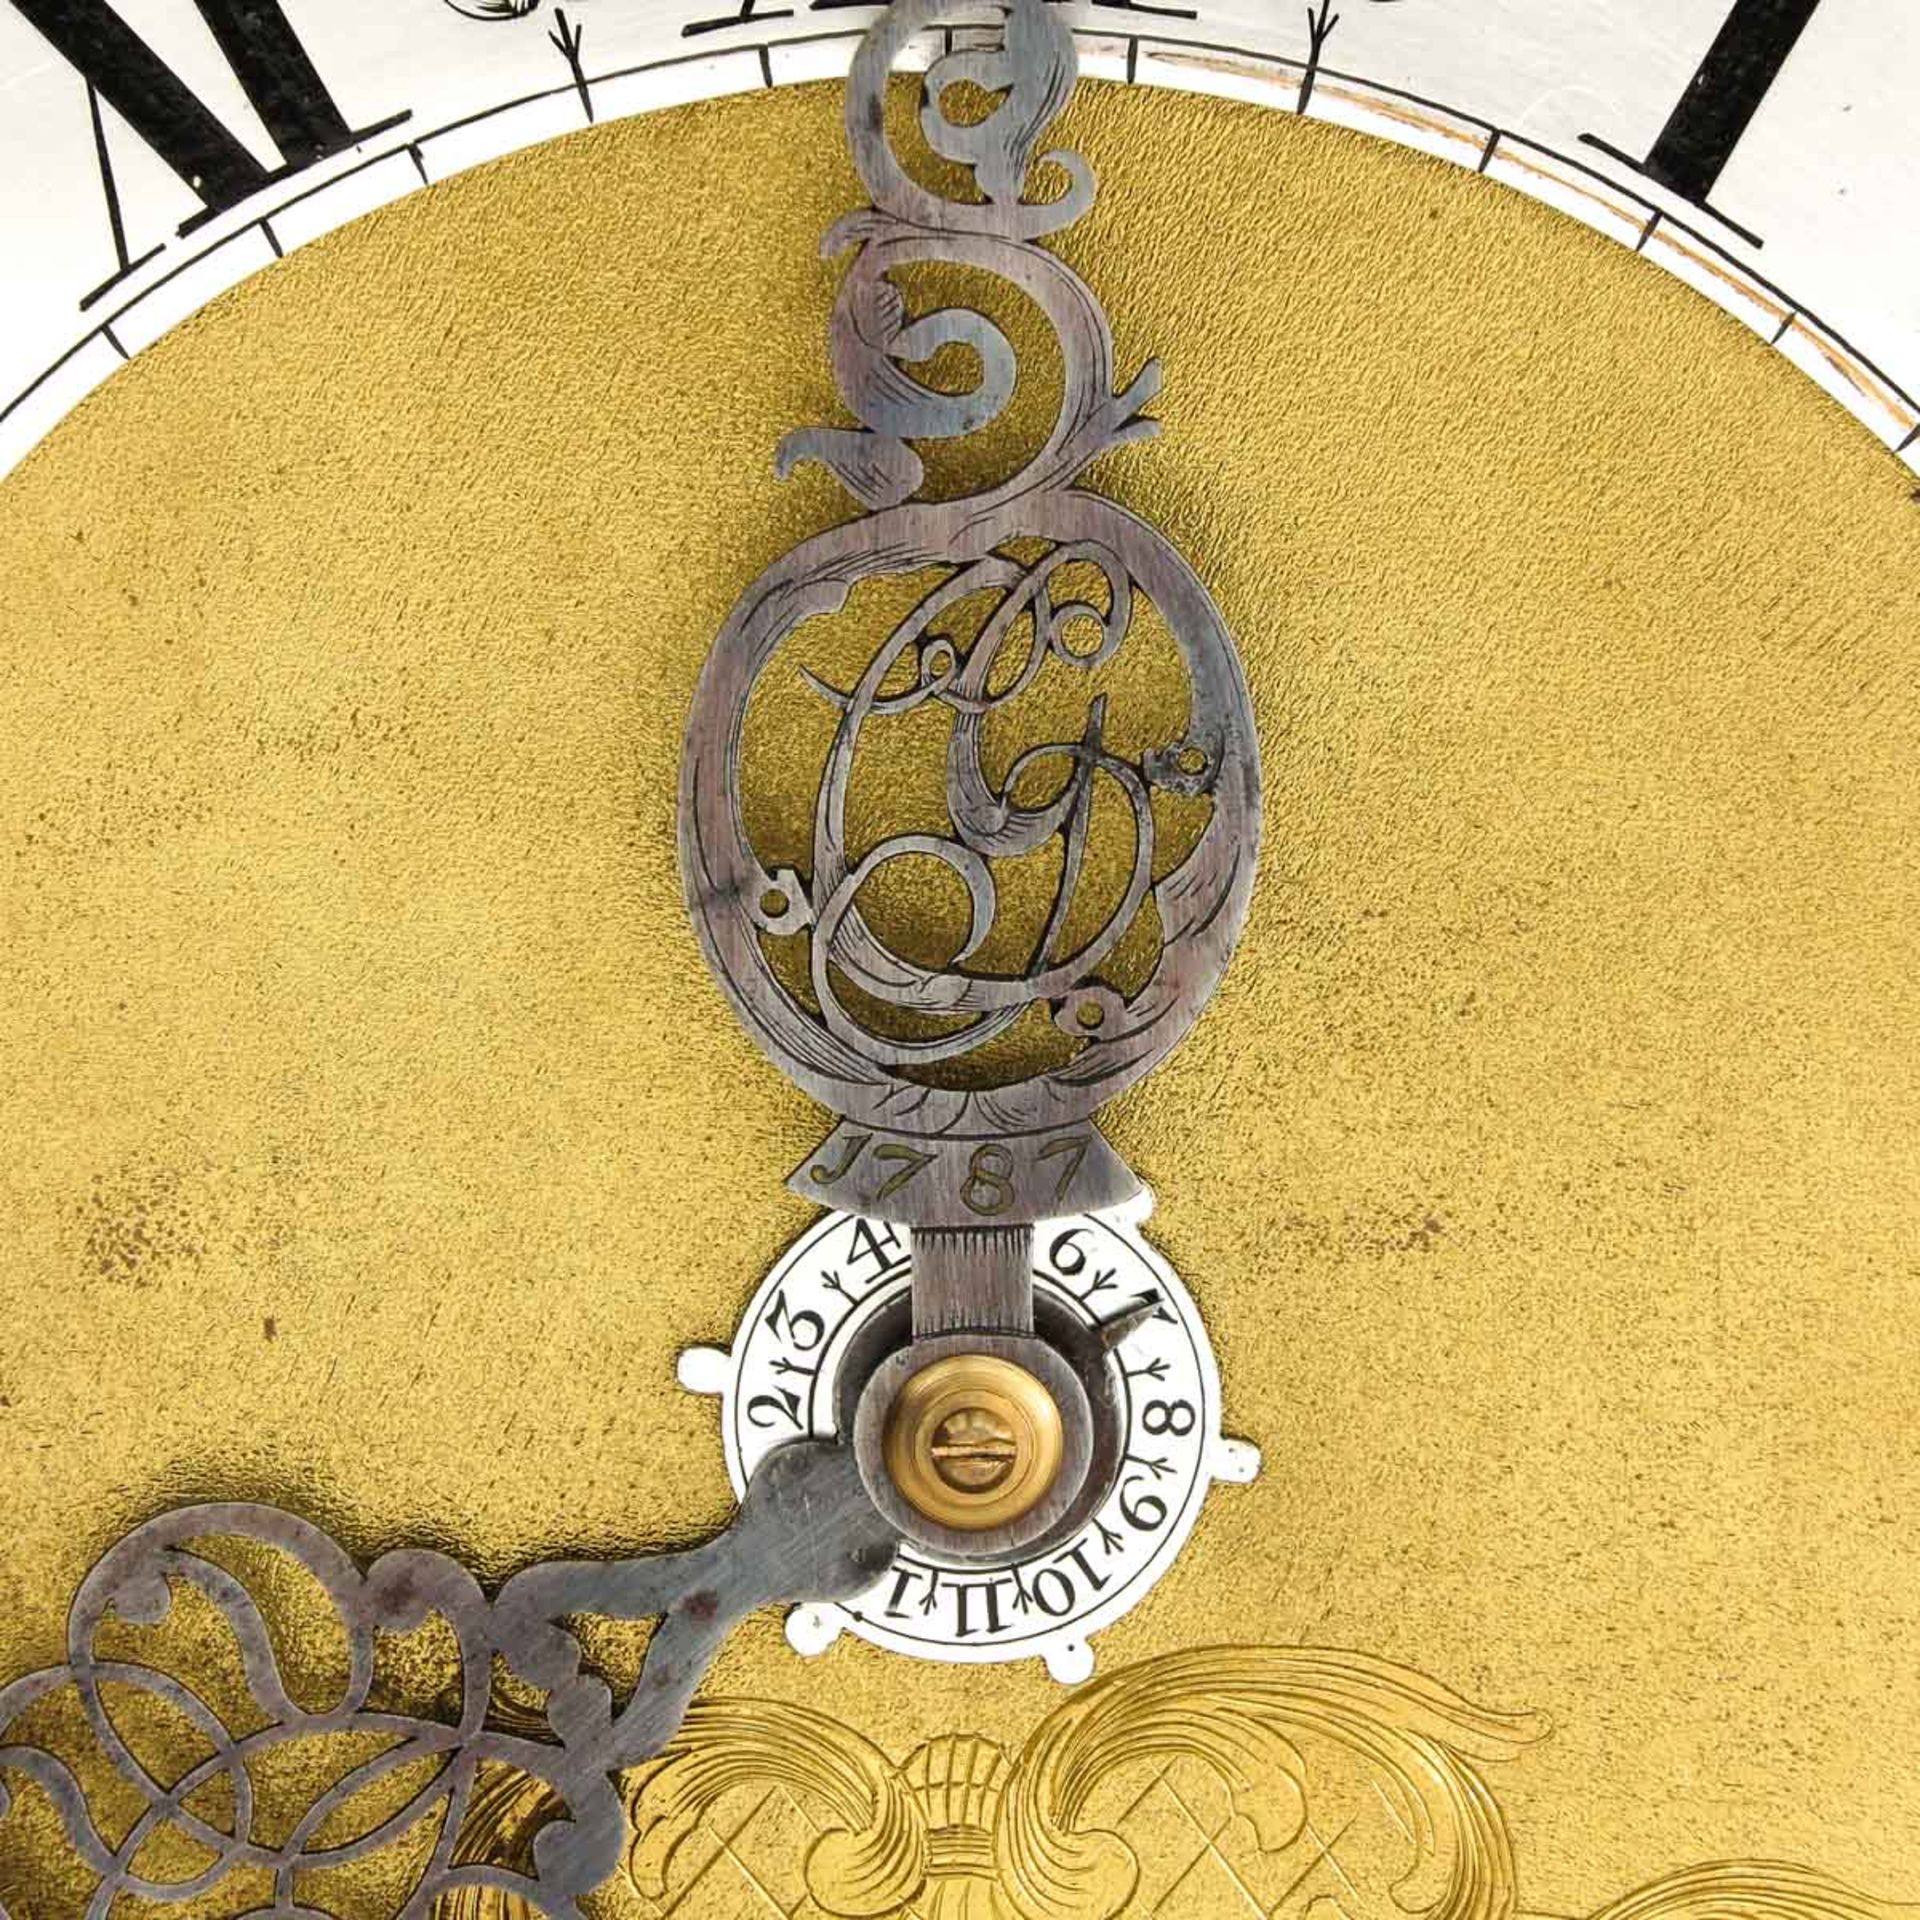 Kortstraat clock - Image 5 of 9